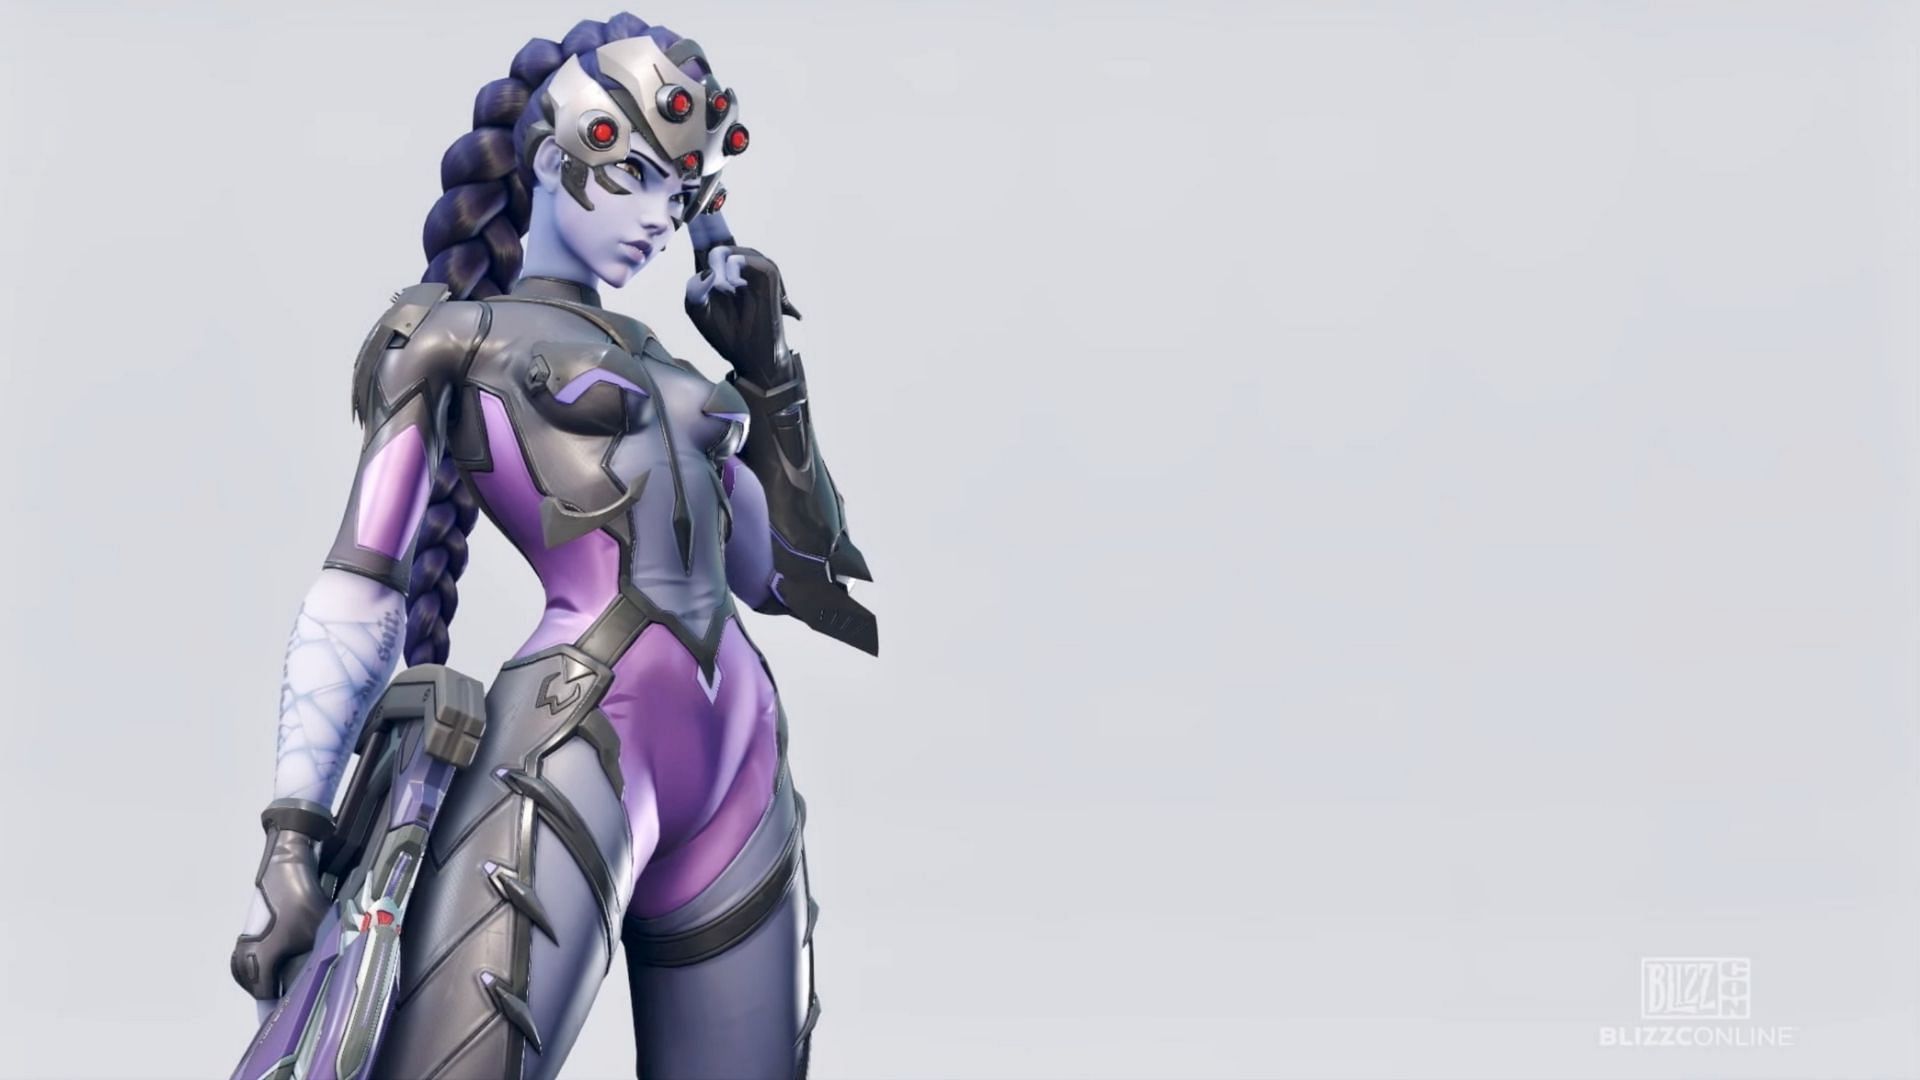 Widowmaker with her new design in Overwatch 2 (Image via Blizzard)